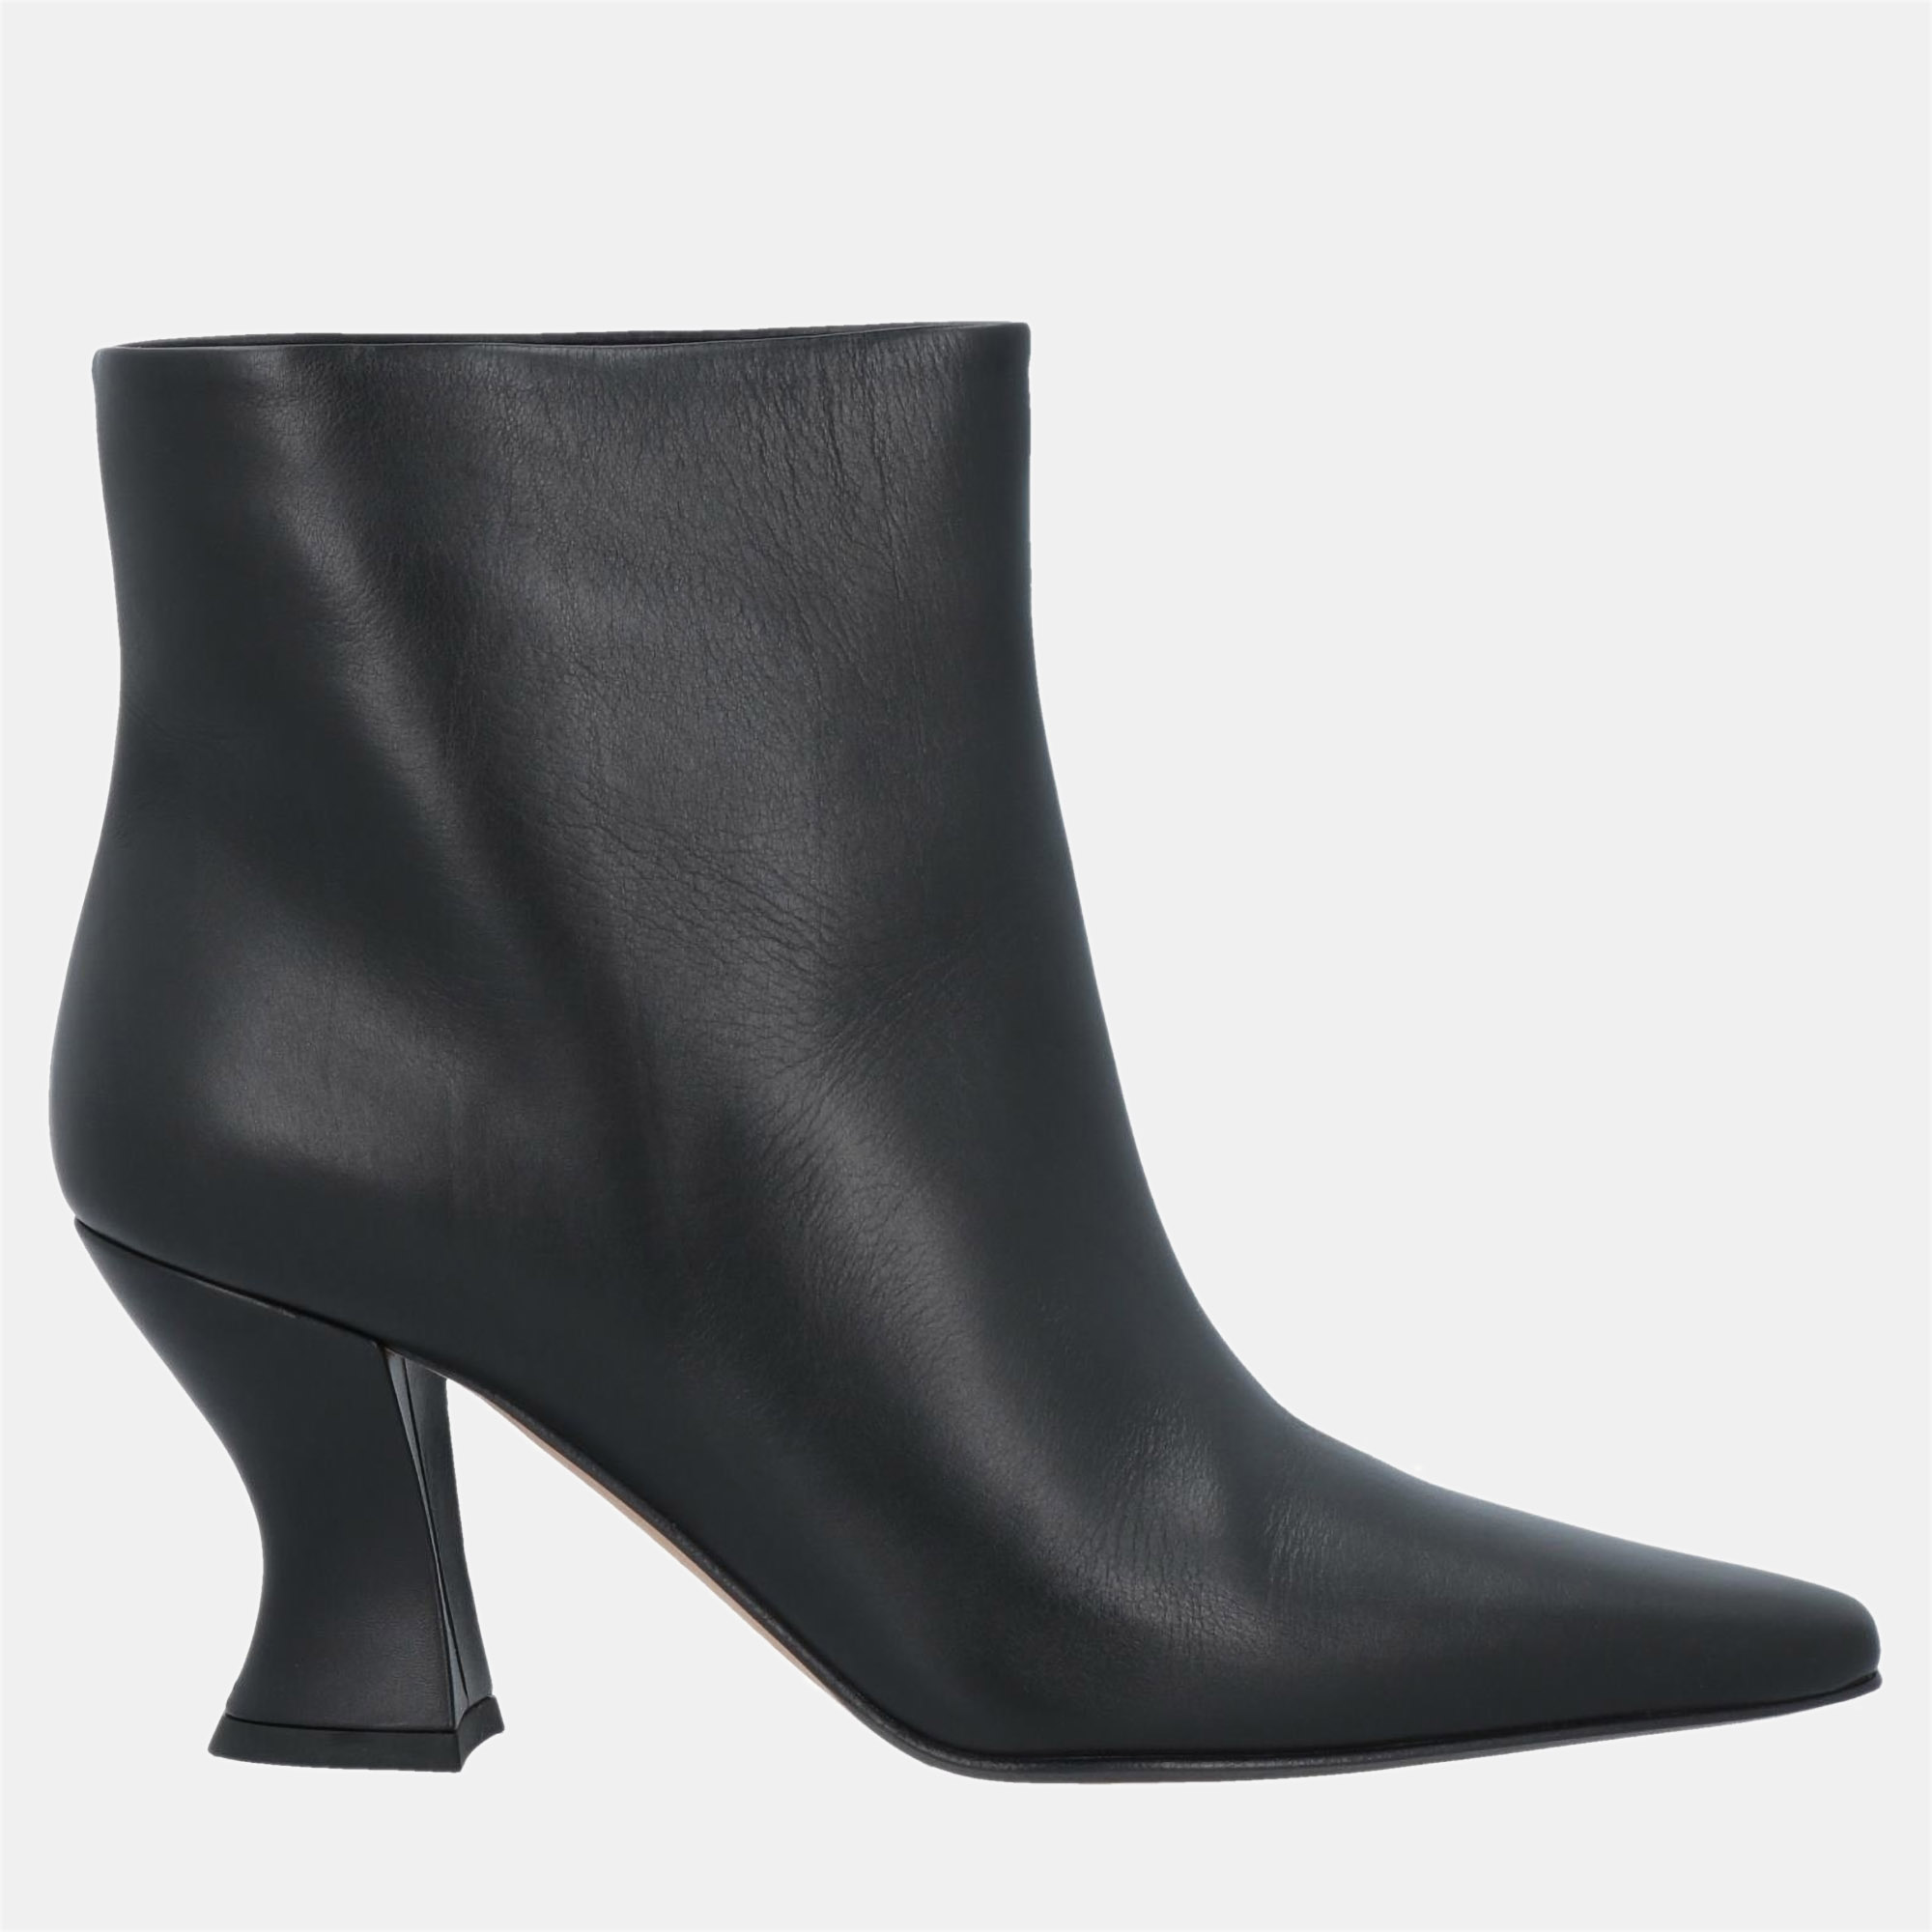 Bottega veneta leather ankle boots size 34